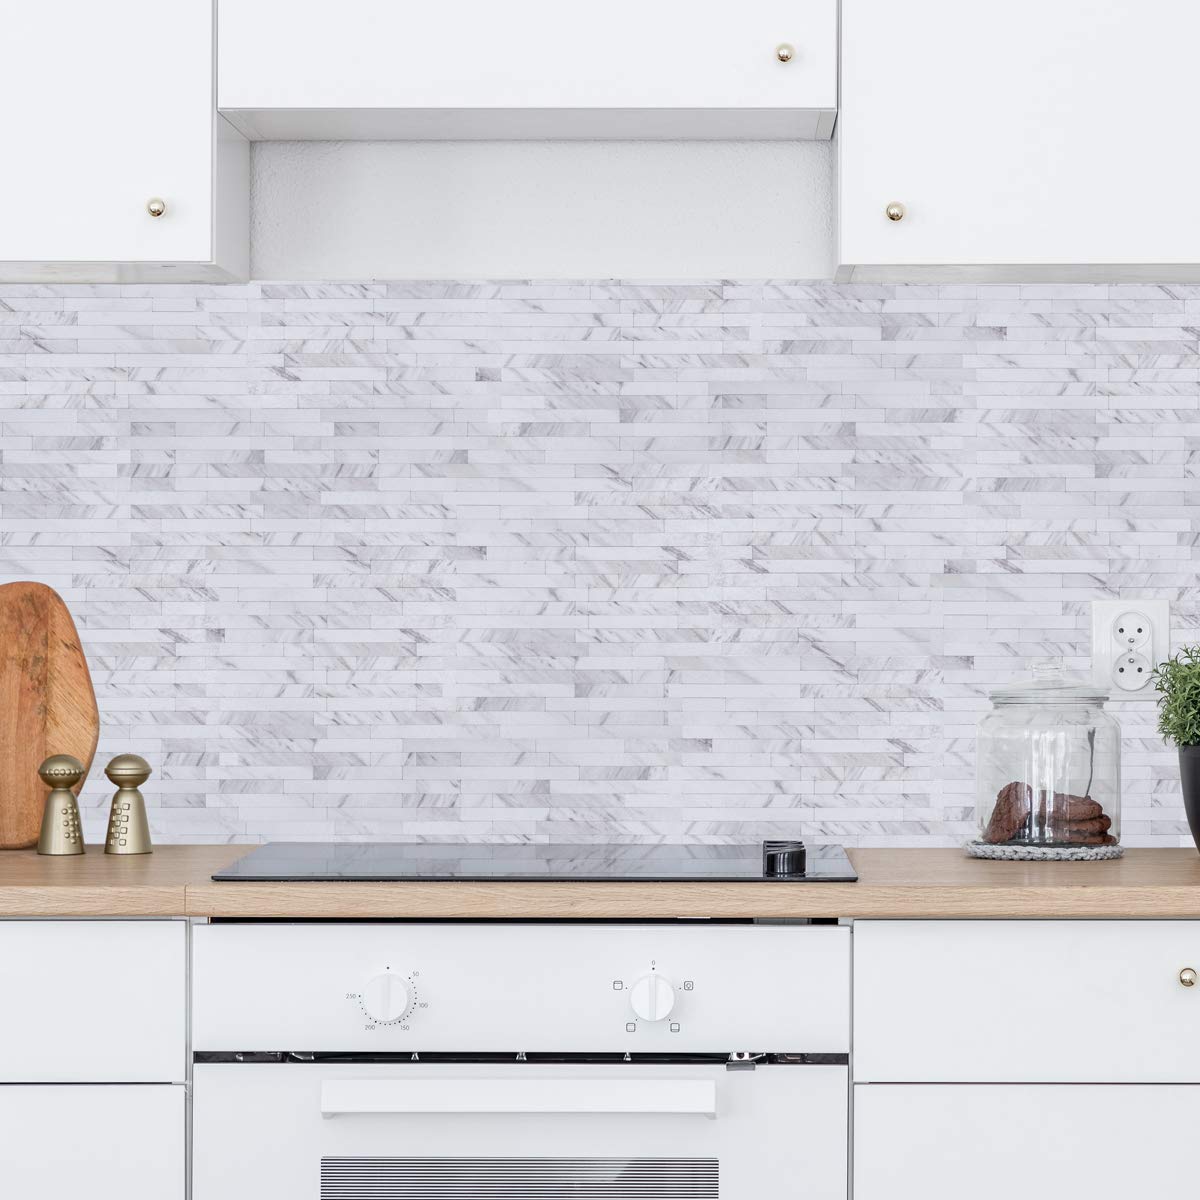 A16614-Art3d 10-Sheet Peel and Stick Stone Backsplash Tile for Kitchen, Bathroom - Volakas White Embellished with Metal Silver